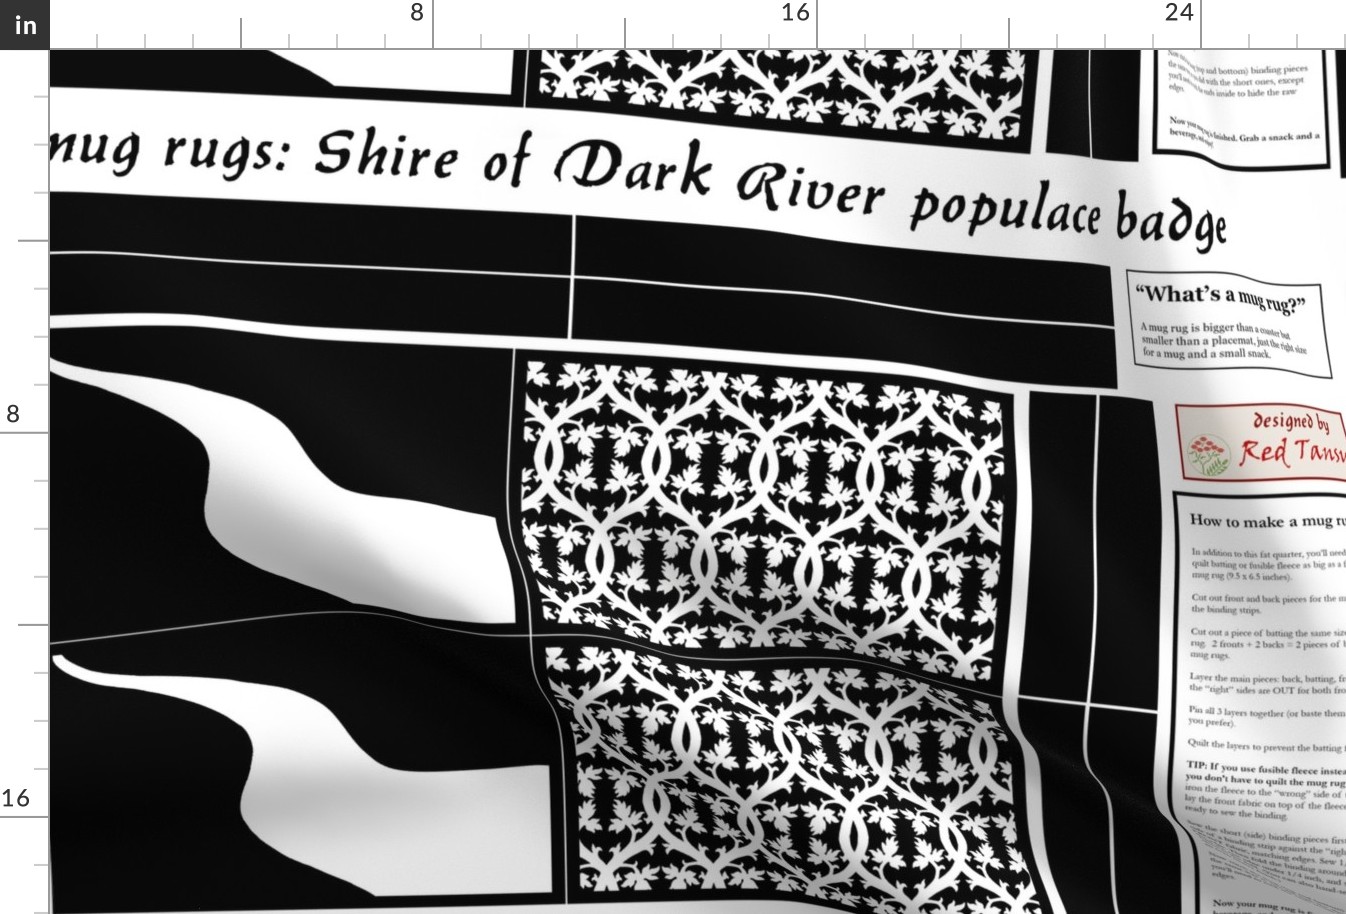 mug rugs: Shire of Dark River (SCA)